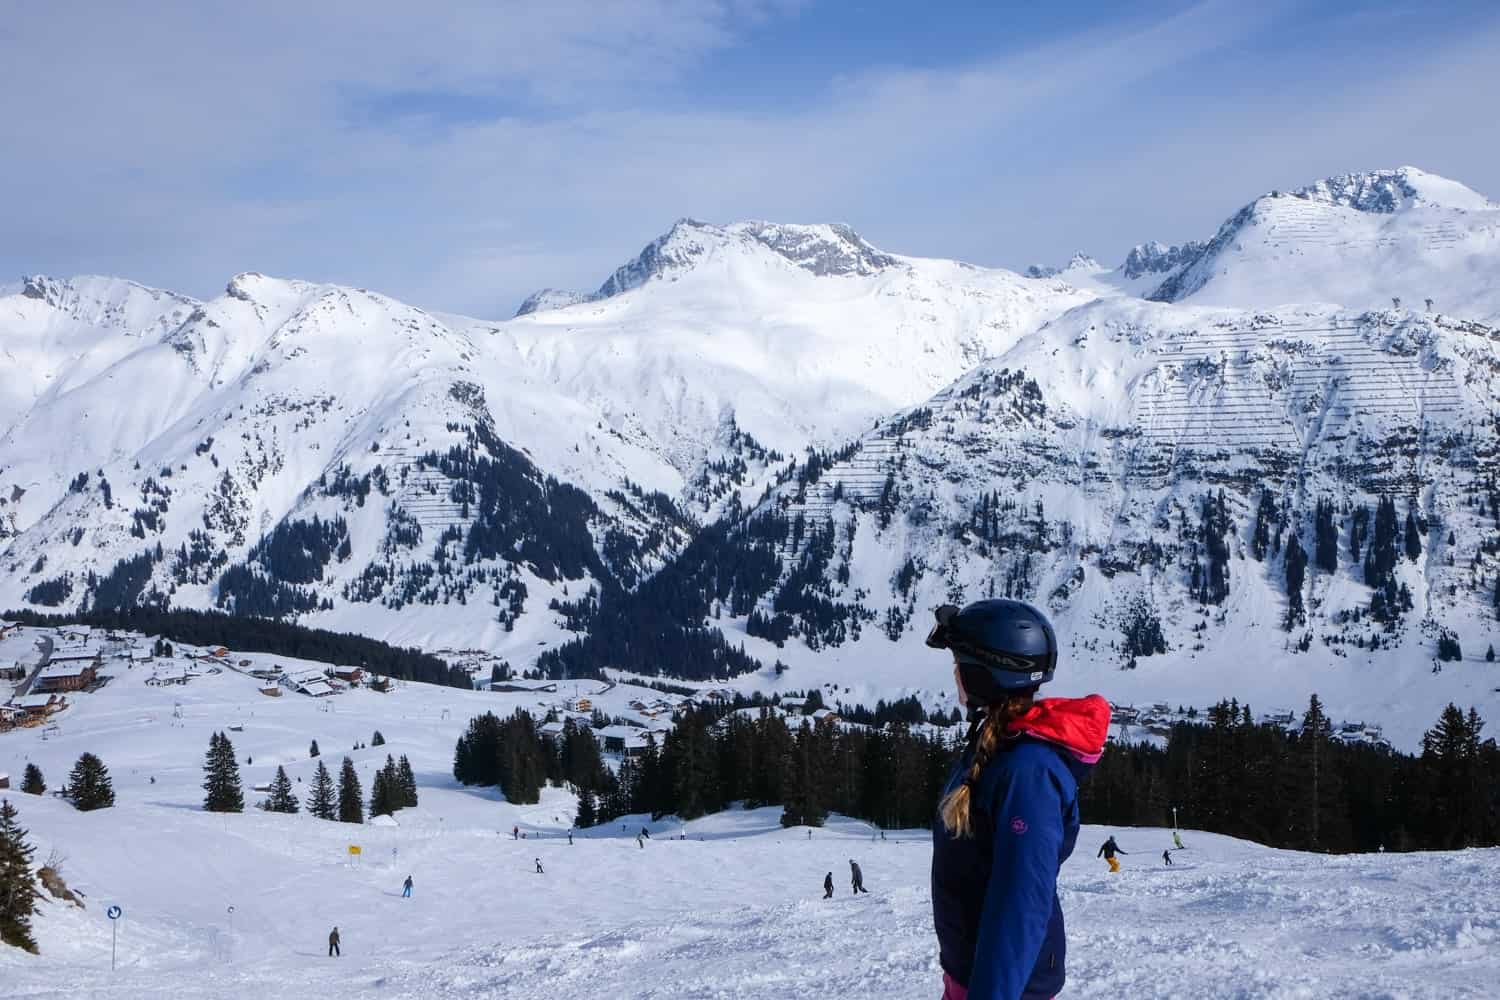 Skiing in Lech Zürs am Arlberg, Austria